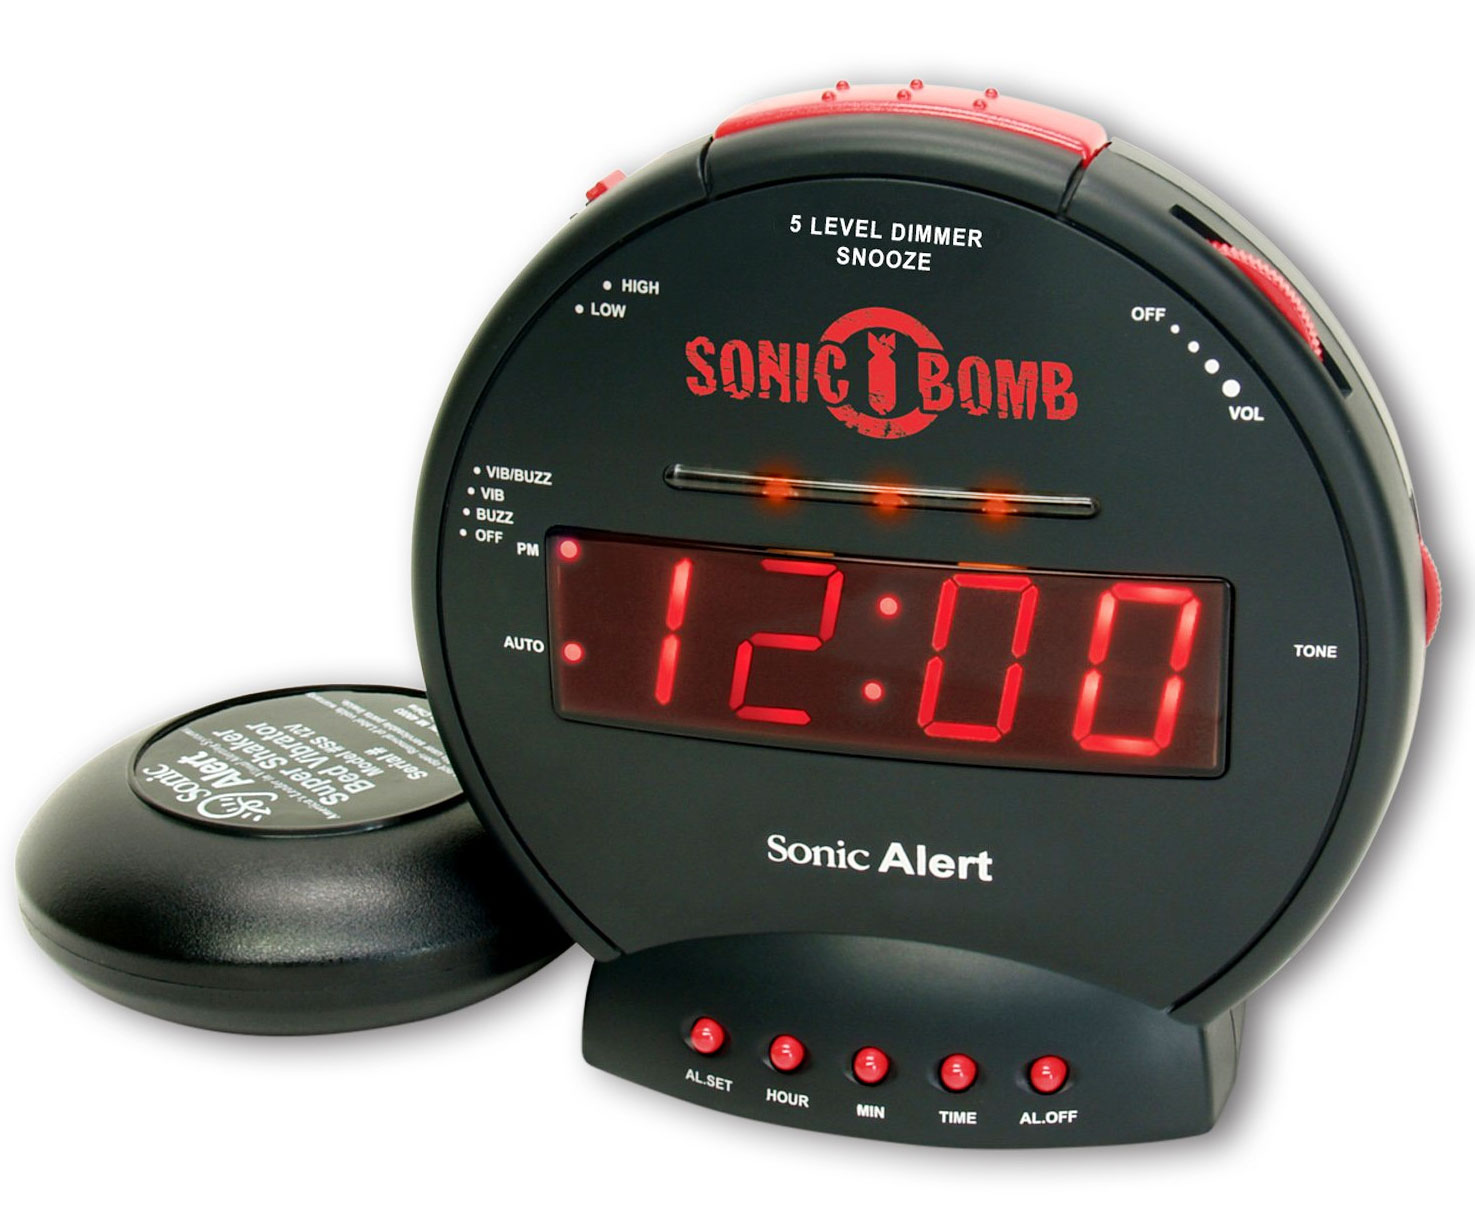 Sonic Bomb Ultra Loud Alarm Clock